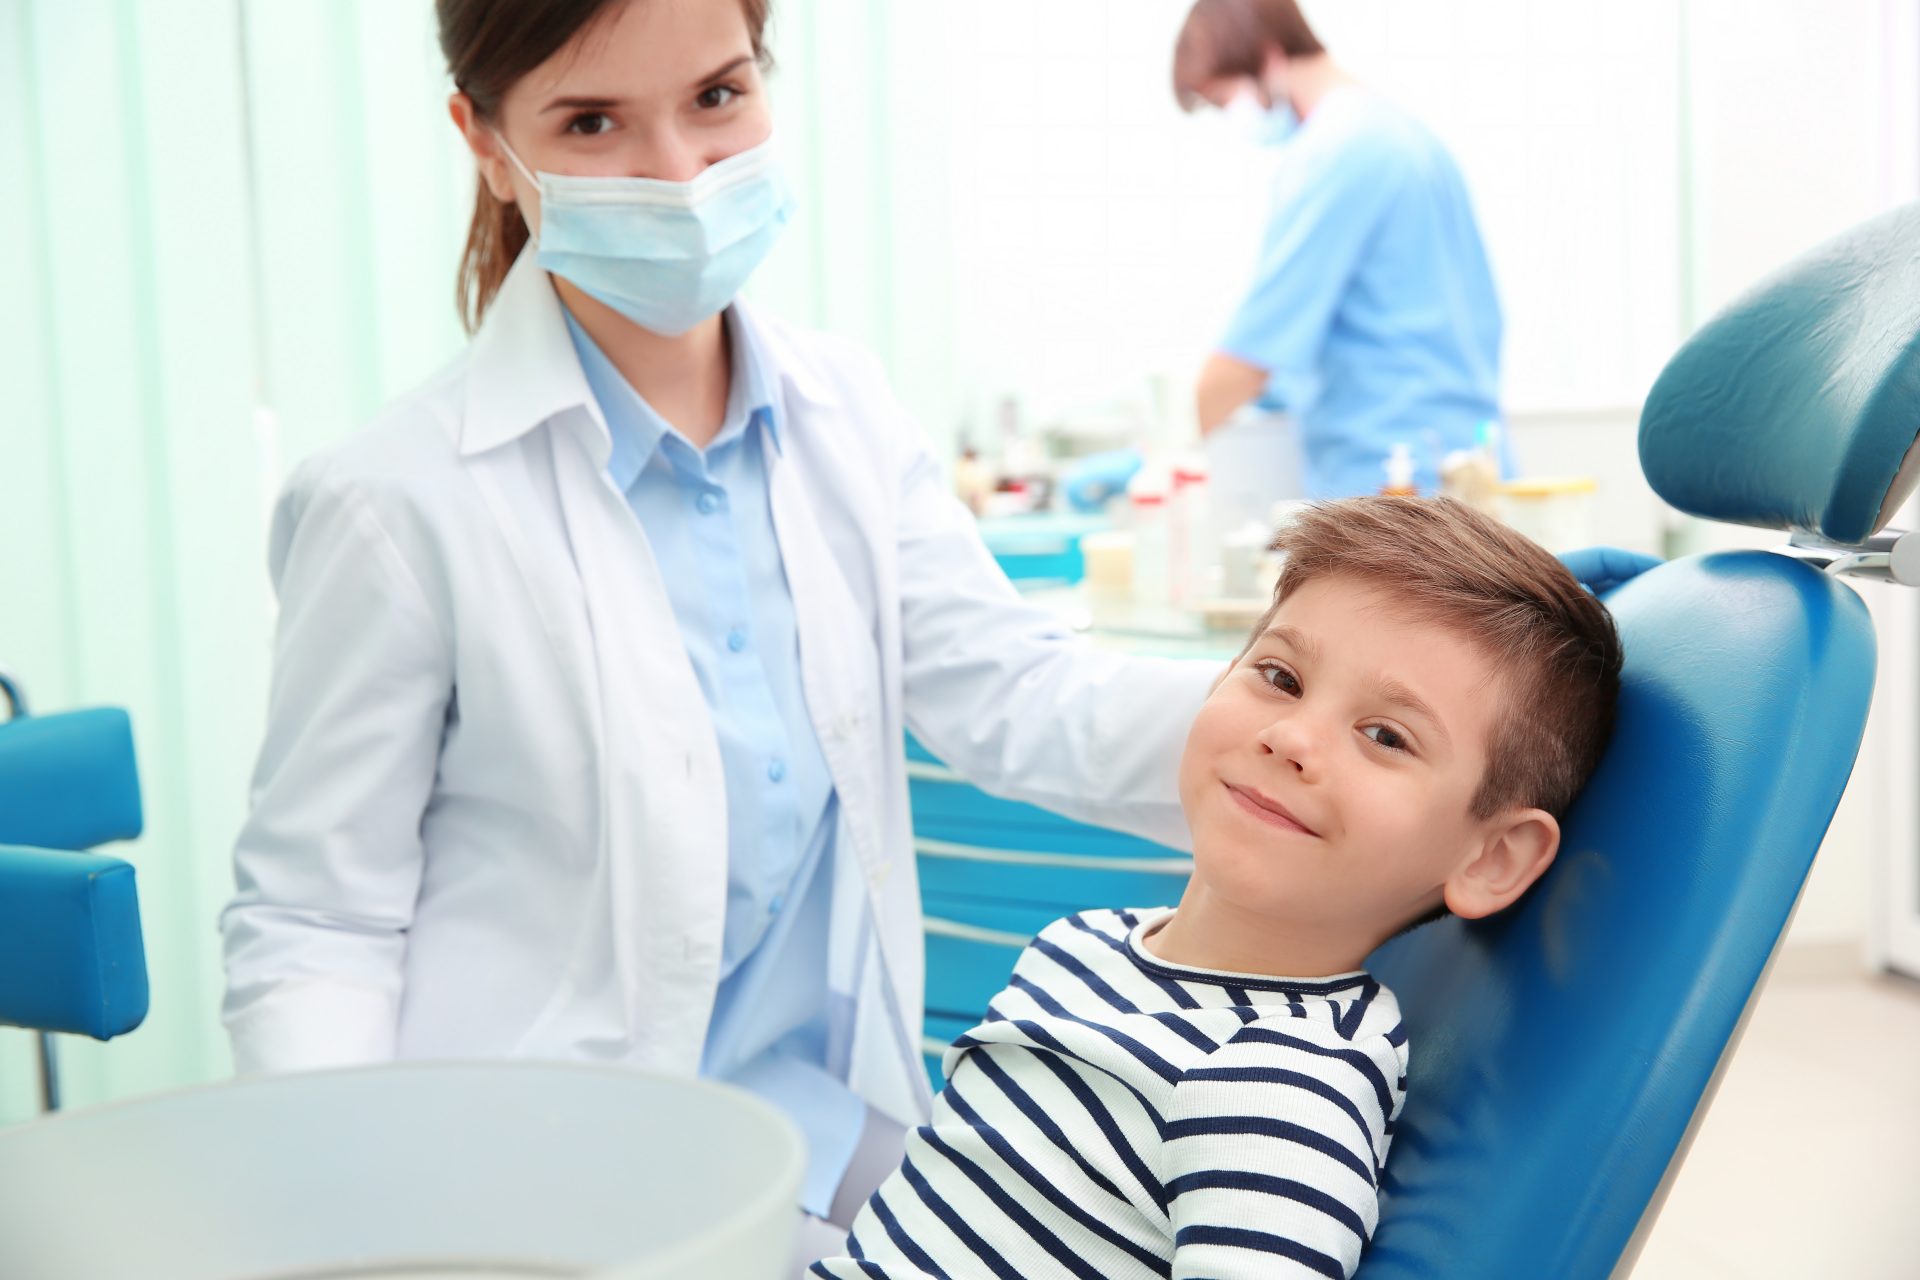 dental visits to schools